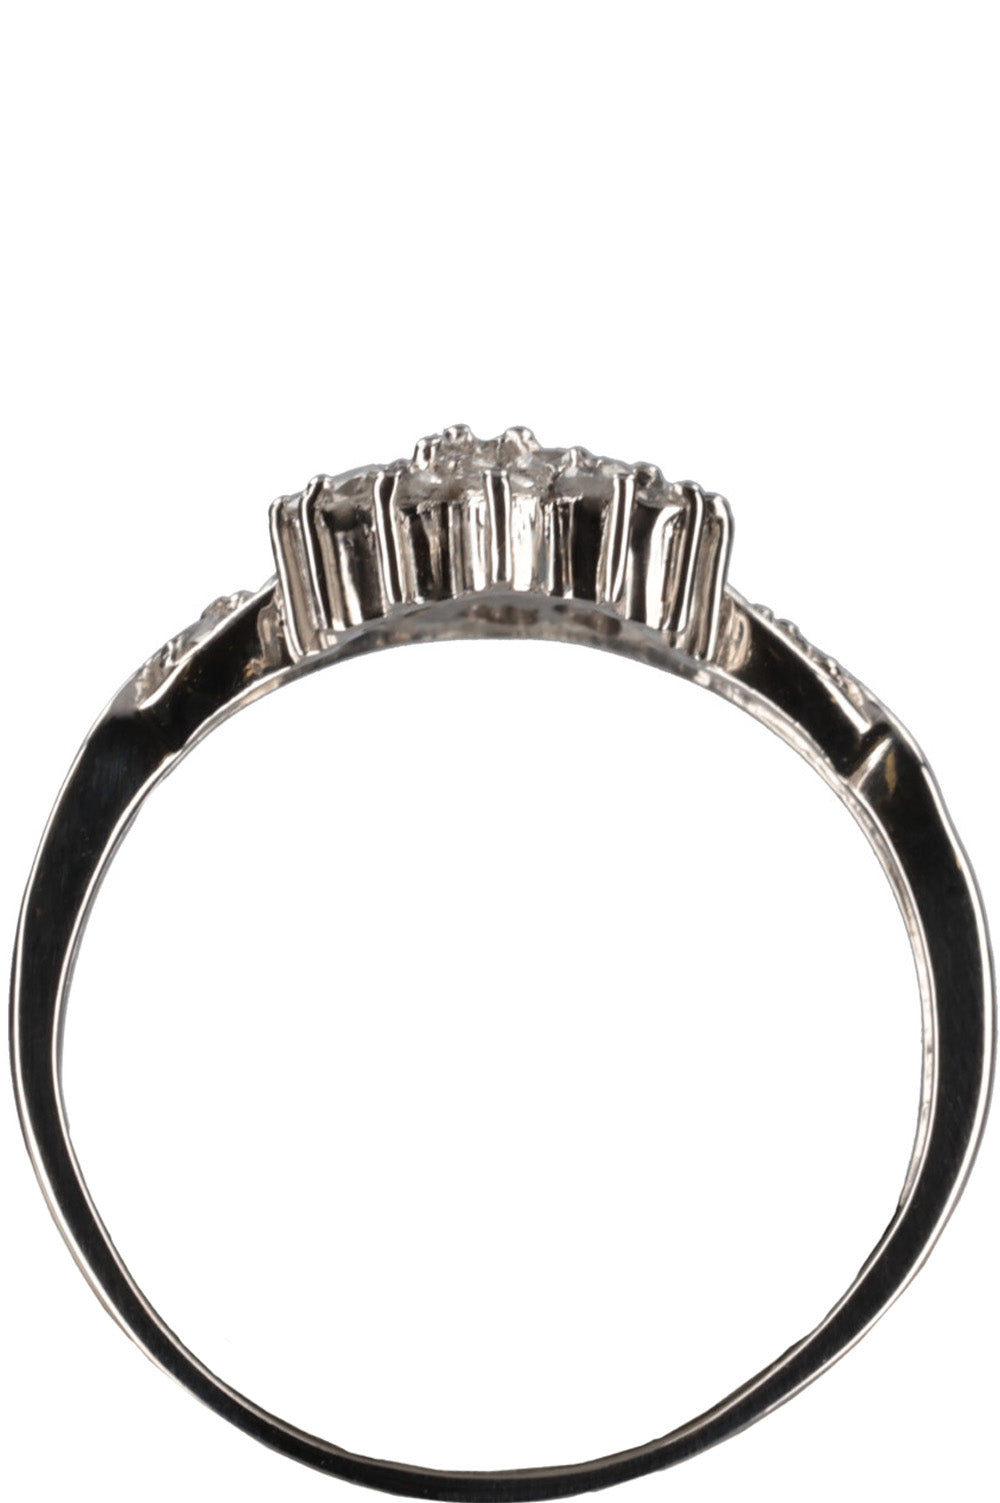 VINTAGE JEWELRY Diamond Flower Ring Platinum